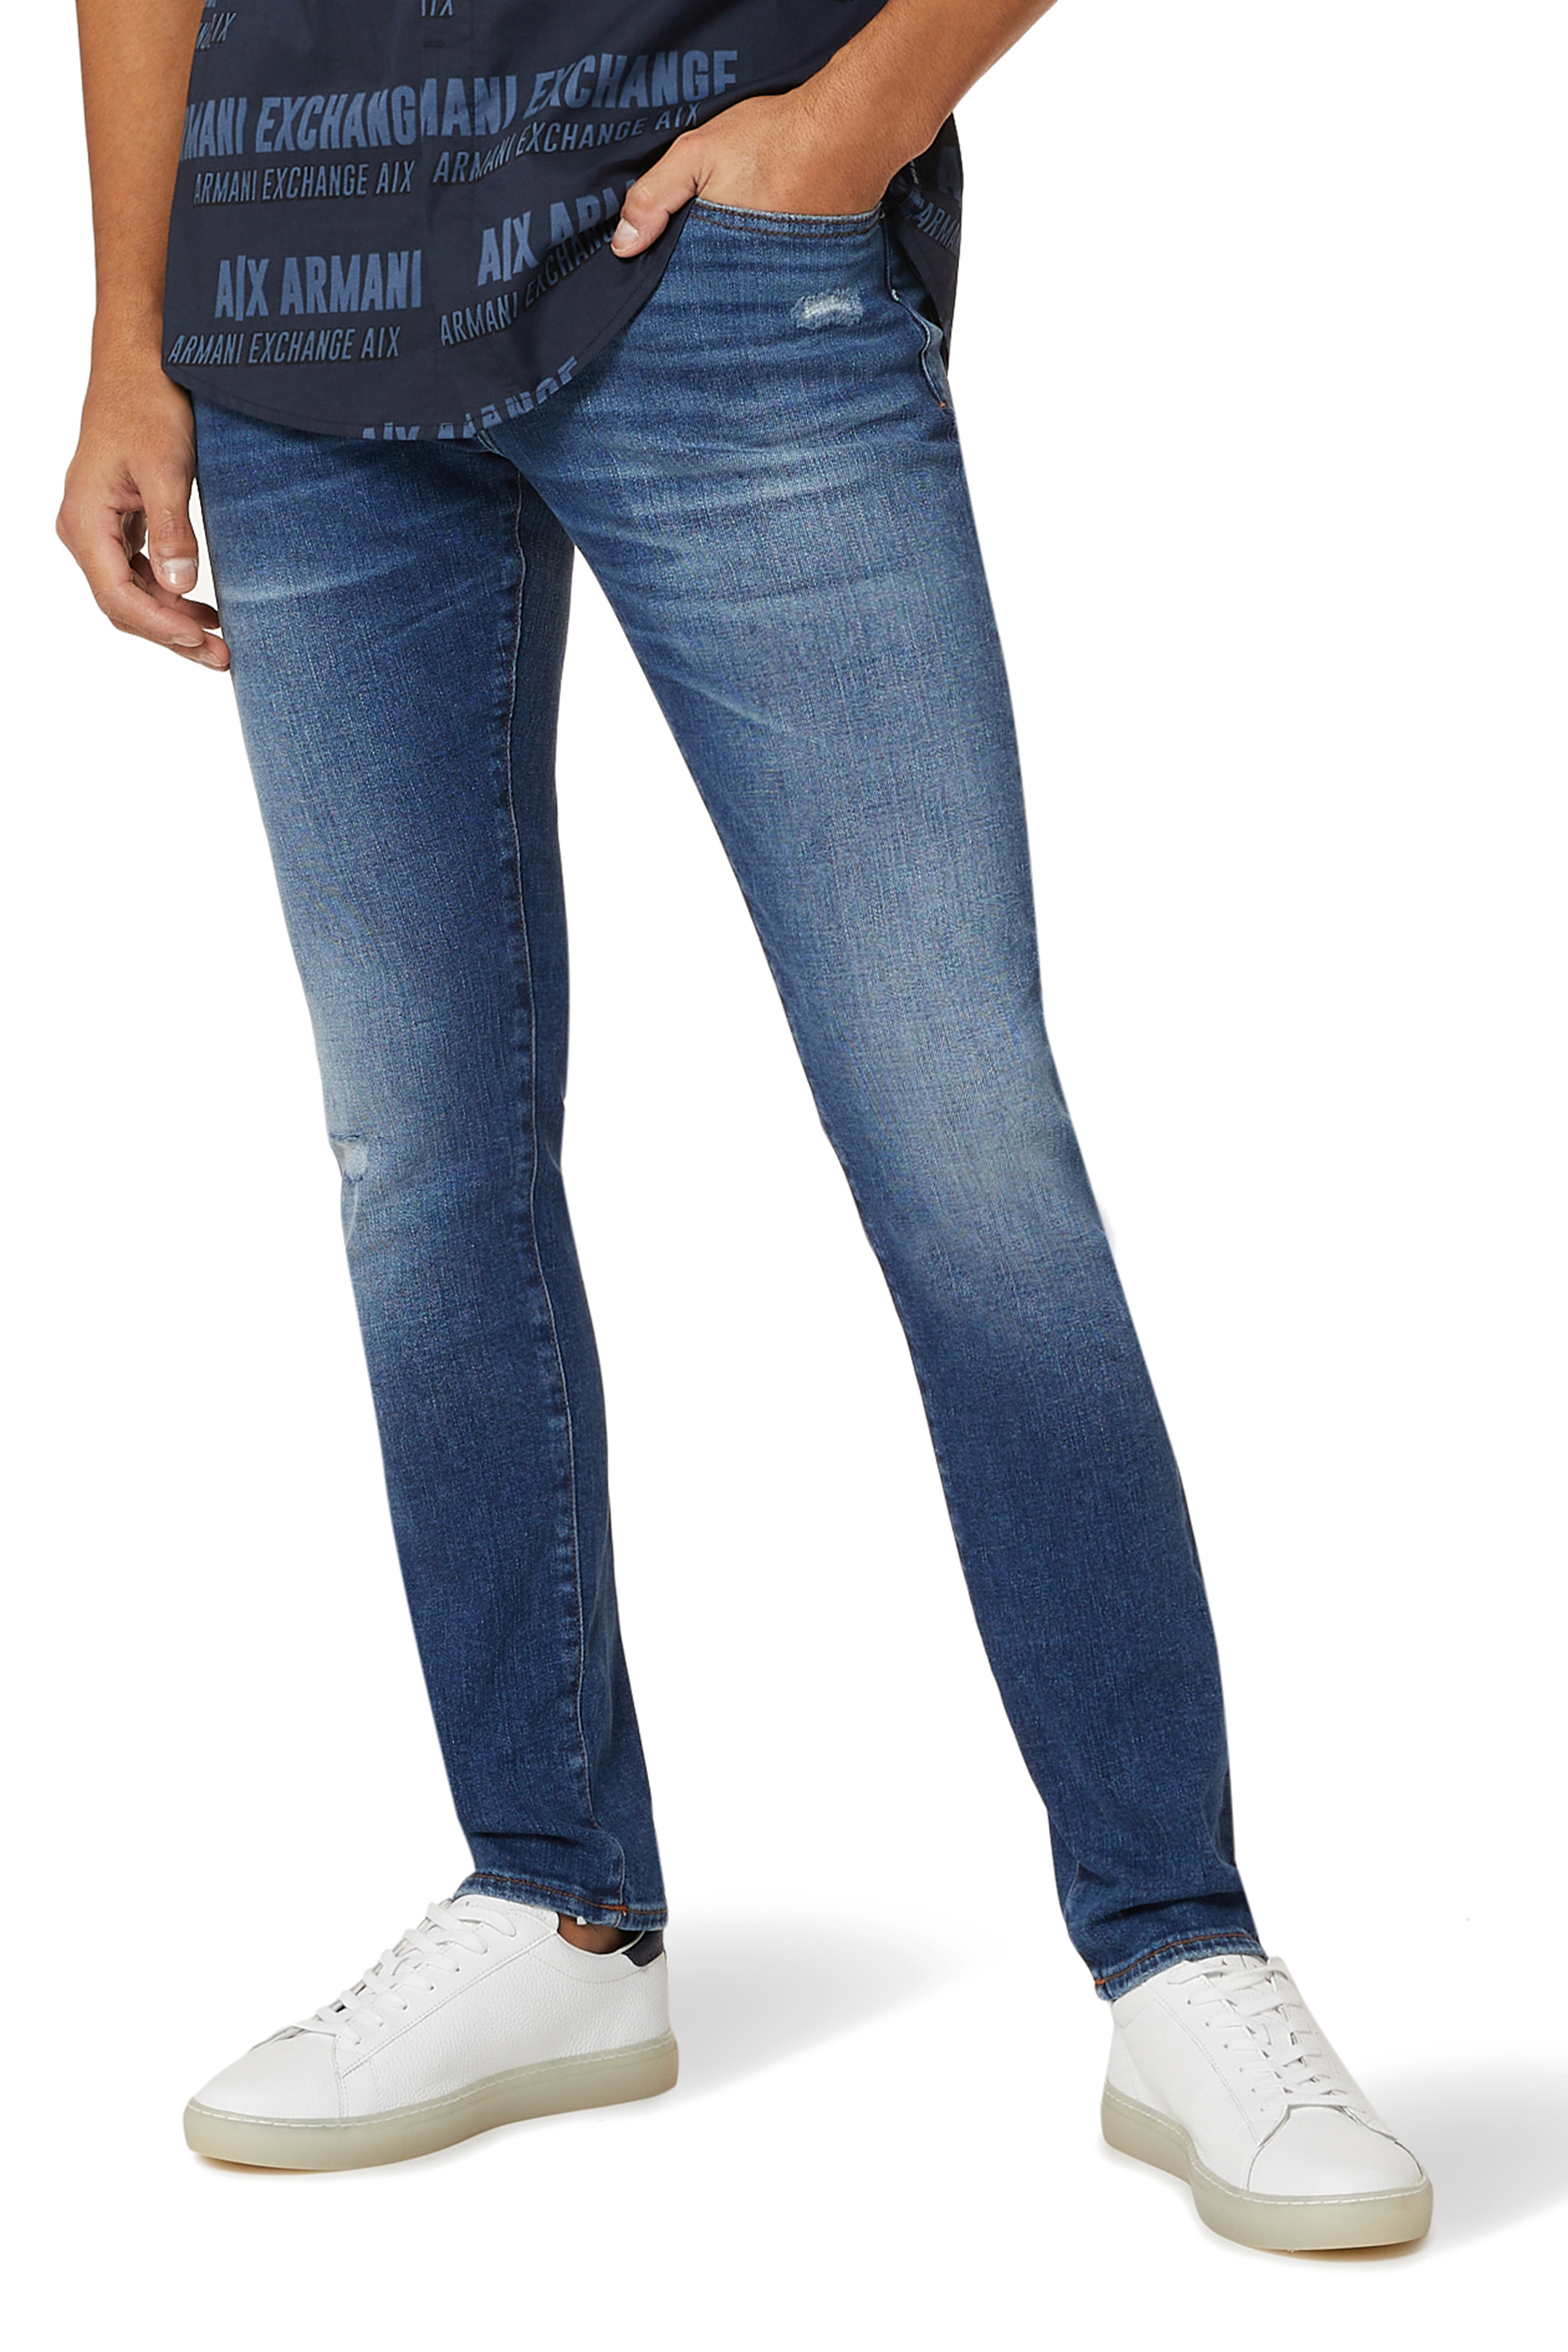 Buy Armani Exchange J14 Stretch Denim Jeans for Mens | Bloomingdale's Qatar